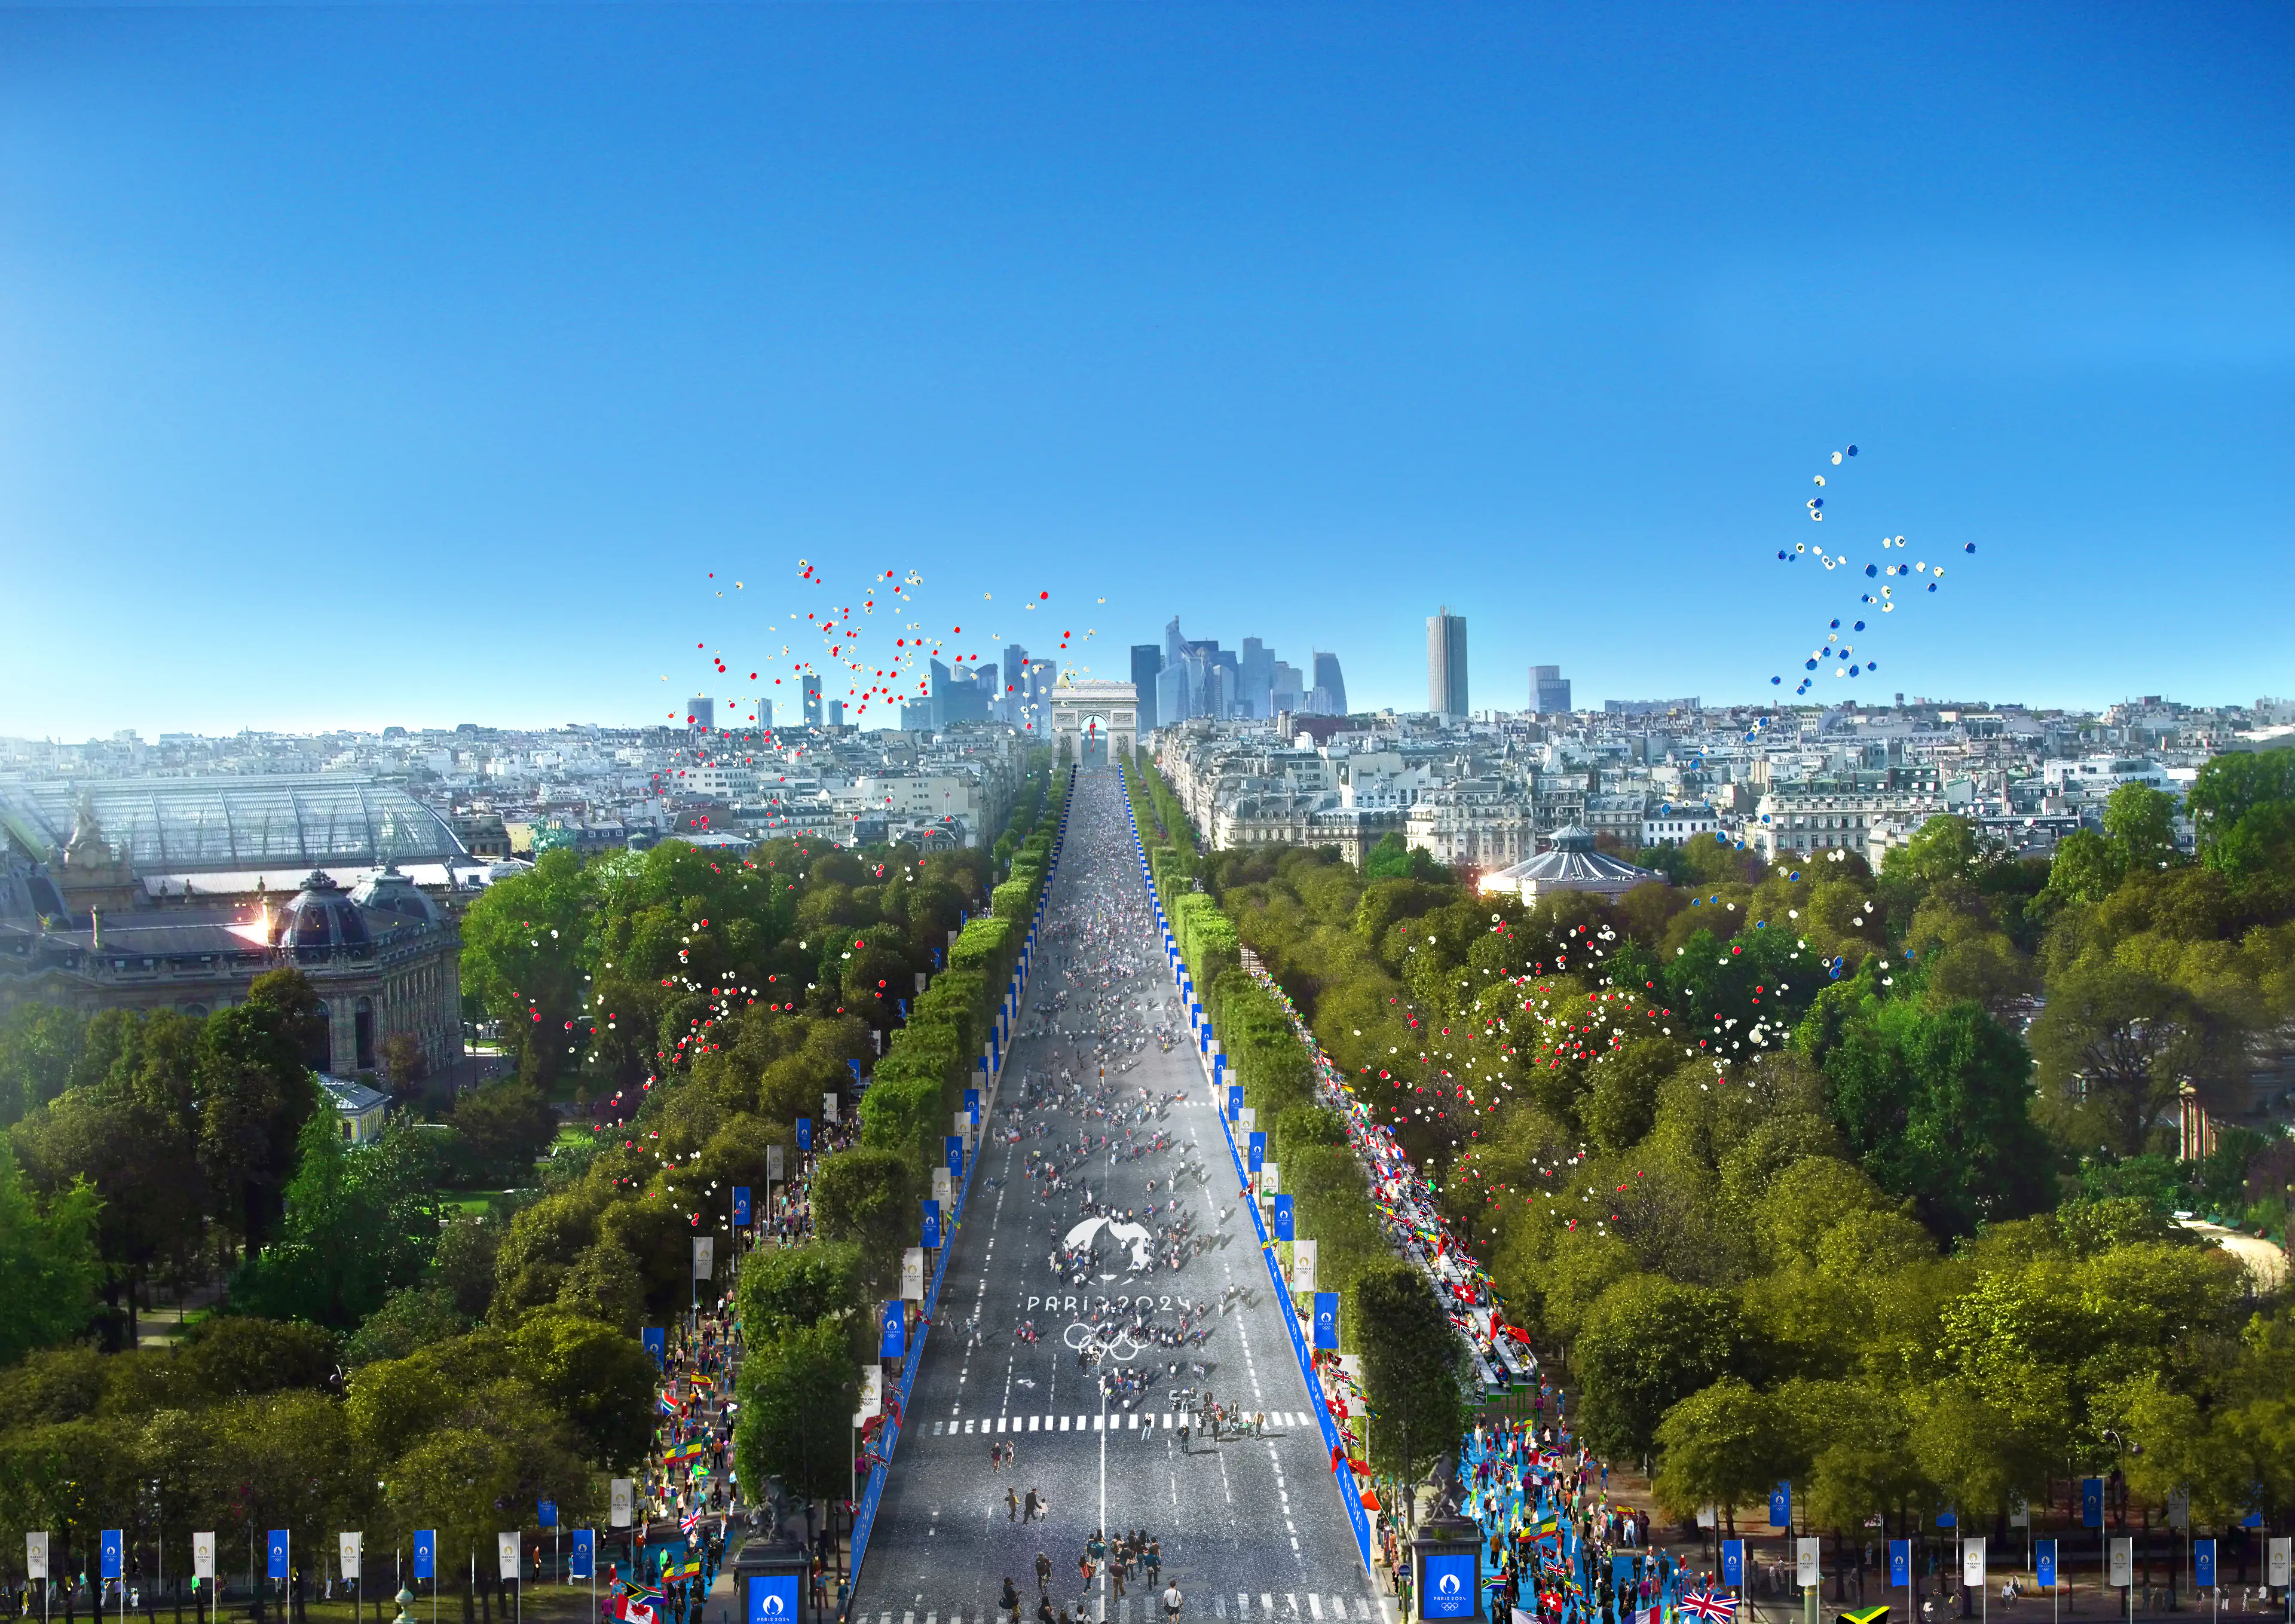 Paris 2024 Olympics Champs Elysees